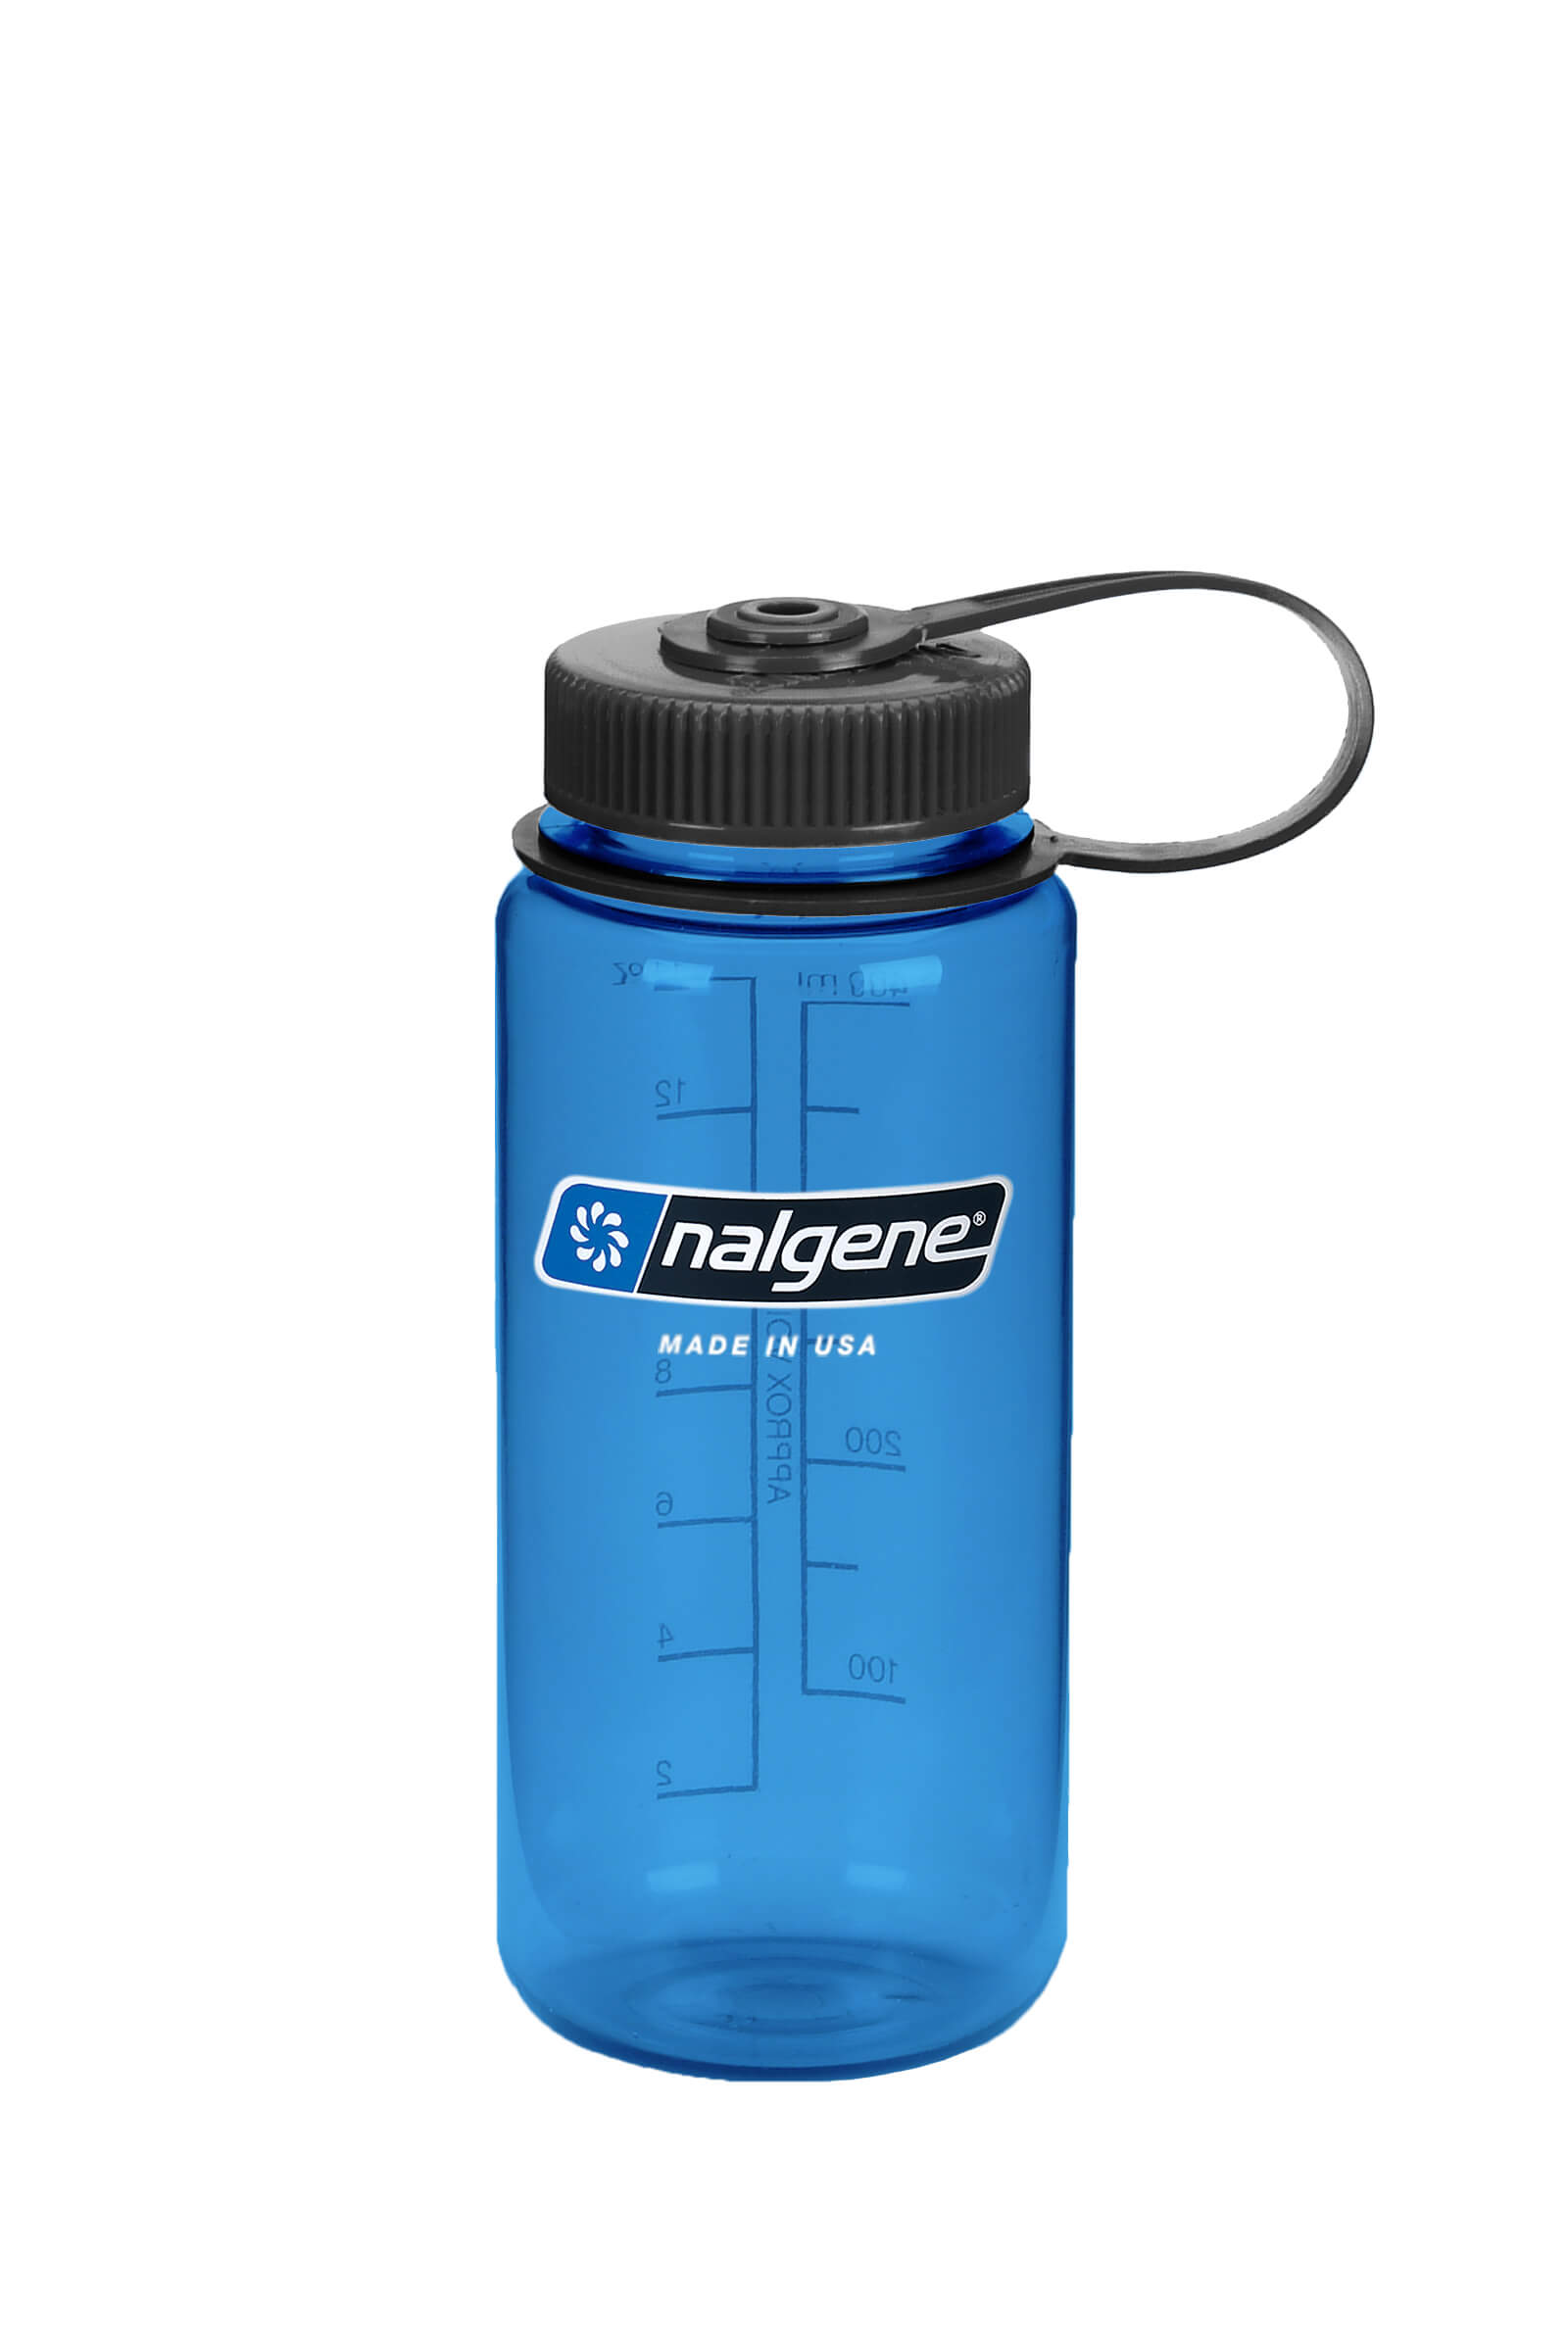 Nalgene Narrow Mouth 16oz BPA Free Tritan Water Bottle Clear Gray w/Black Lid 